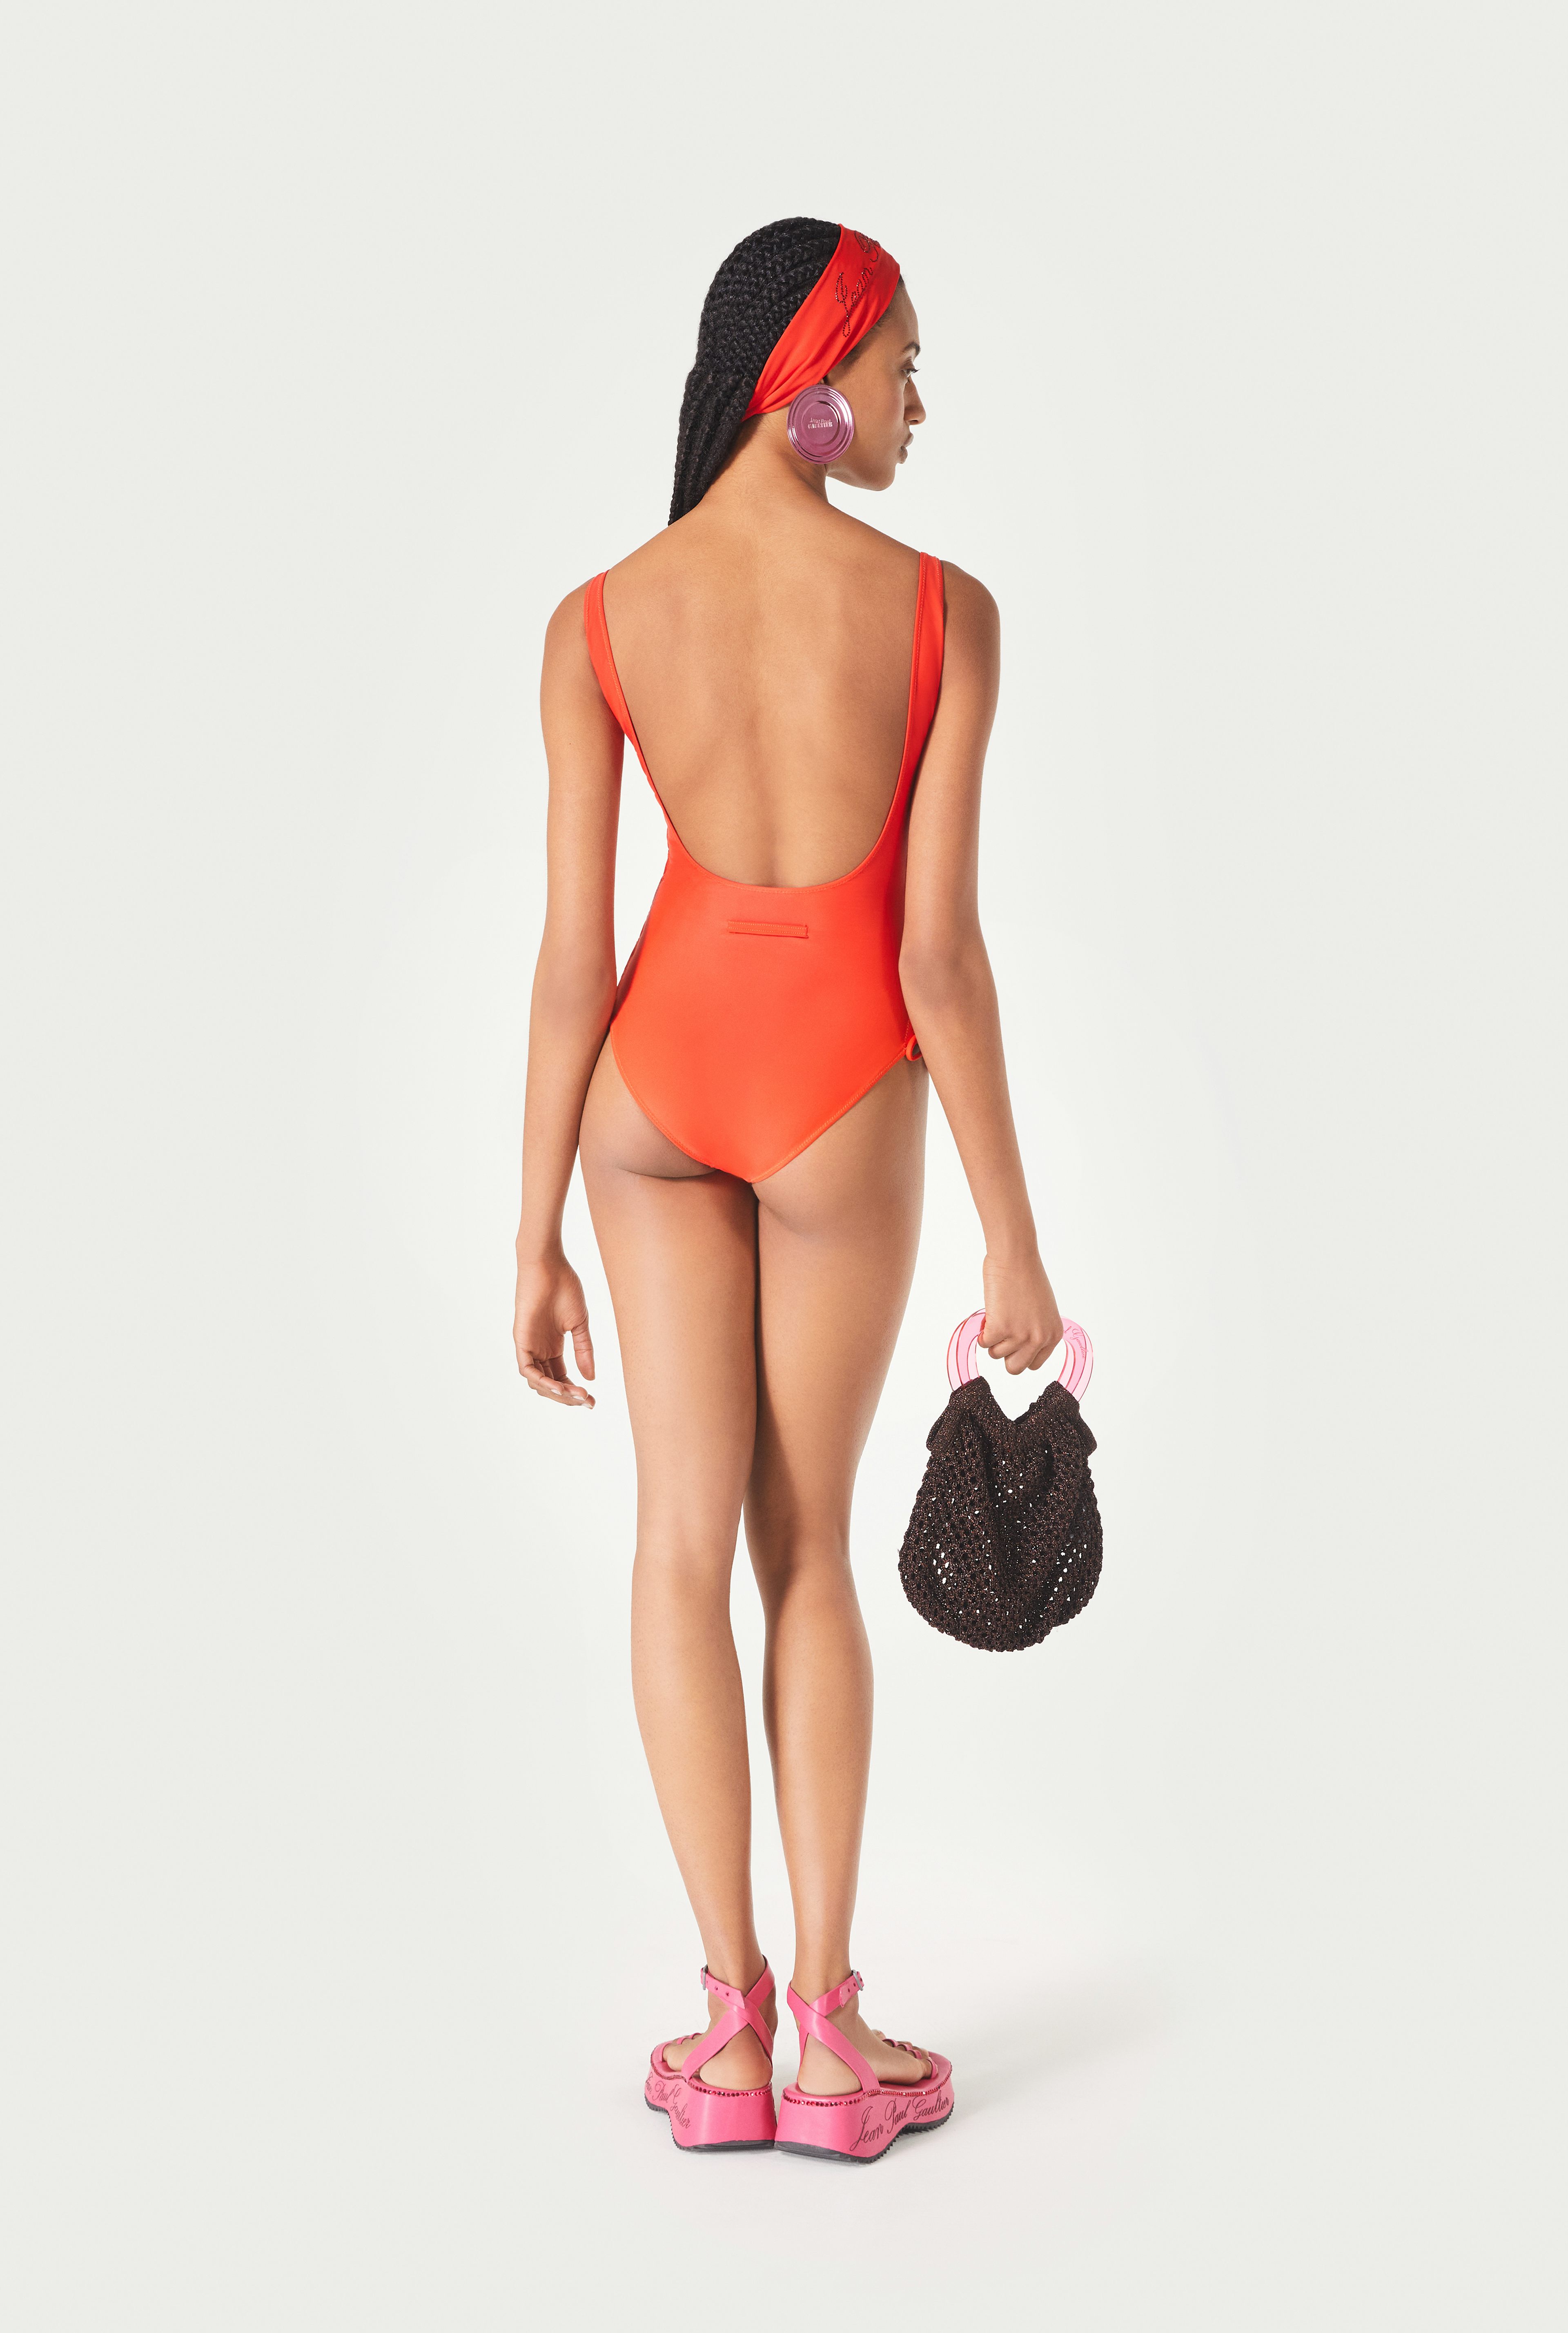 The Red Évidemment Swimsuit Jean Paul Gaultier